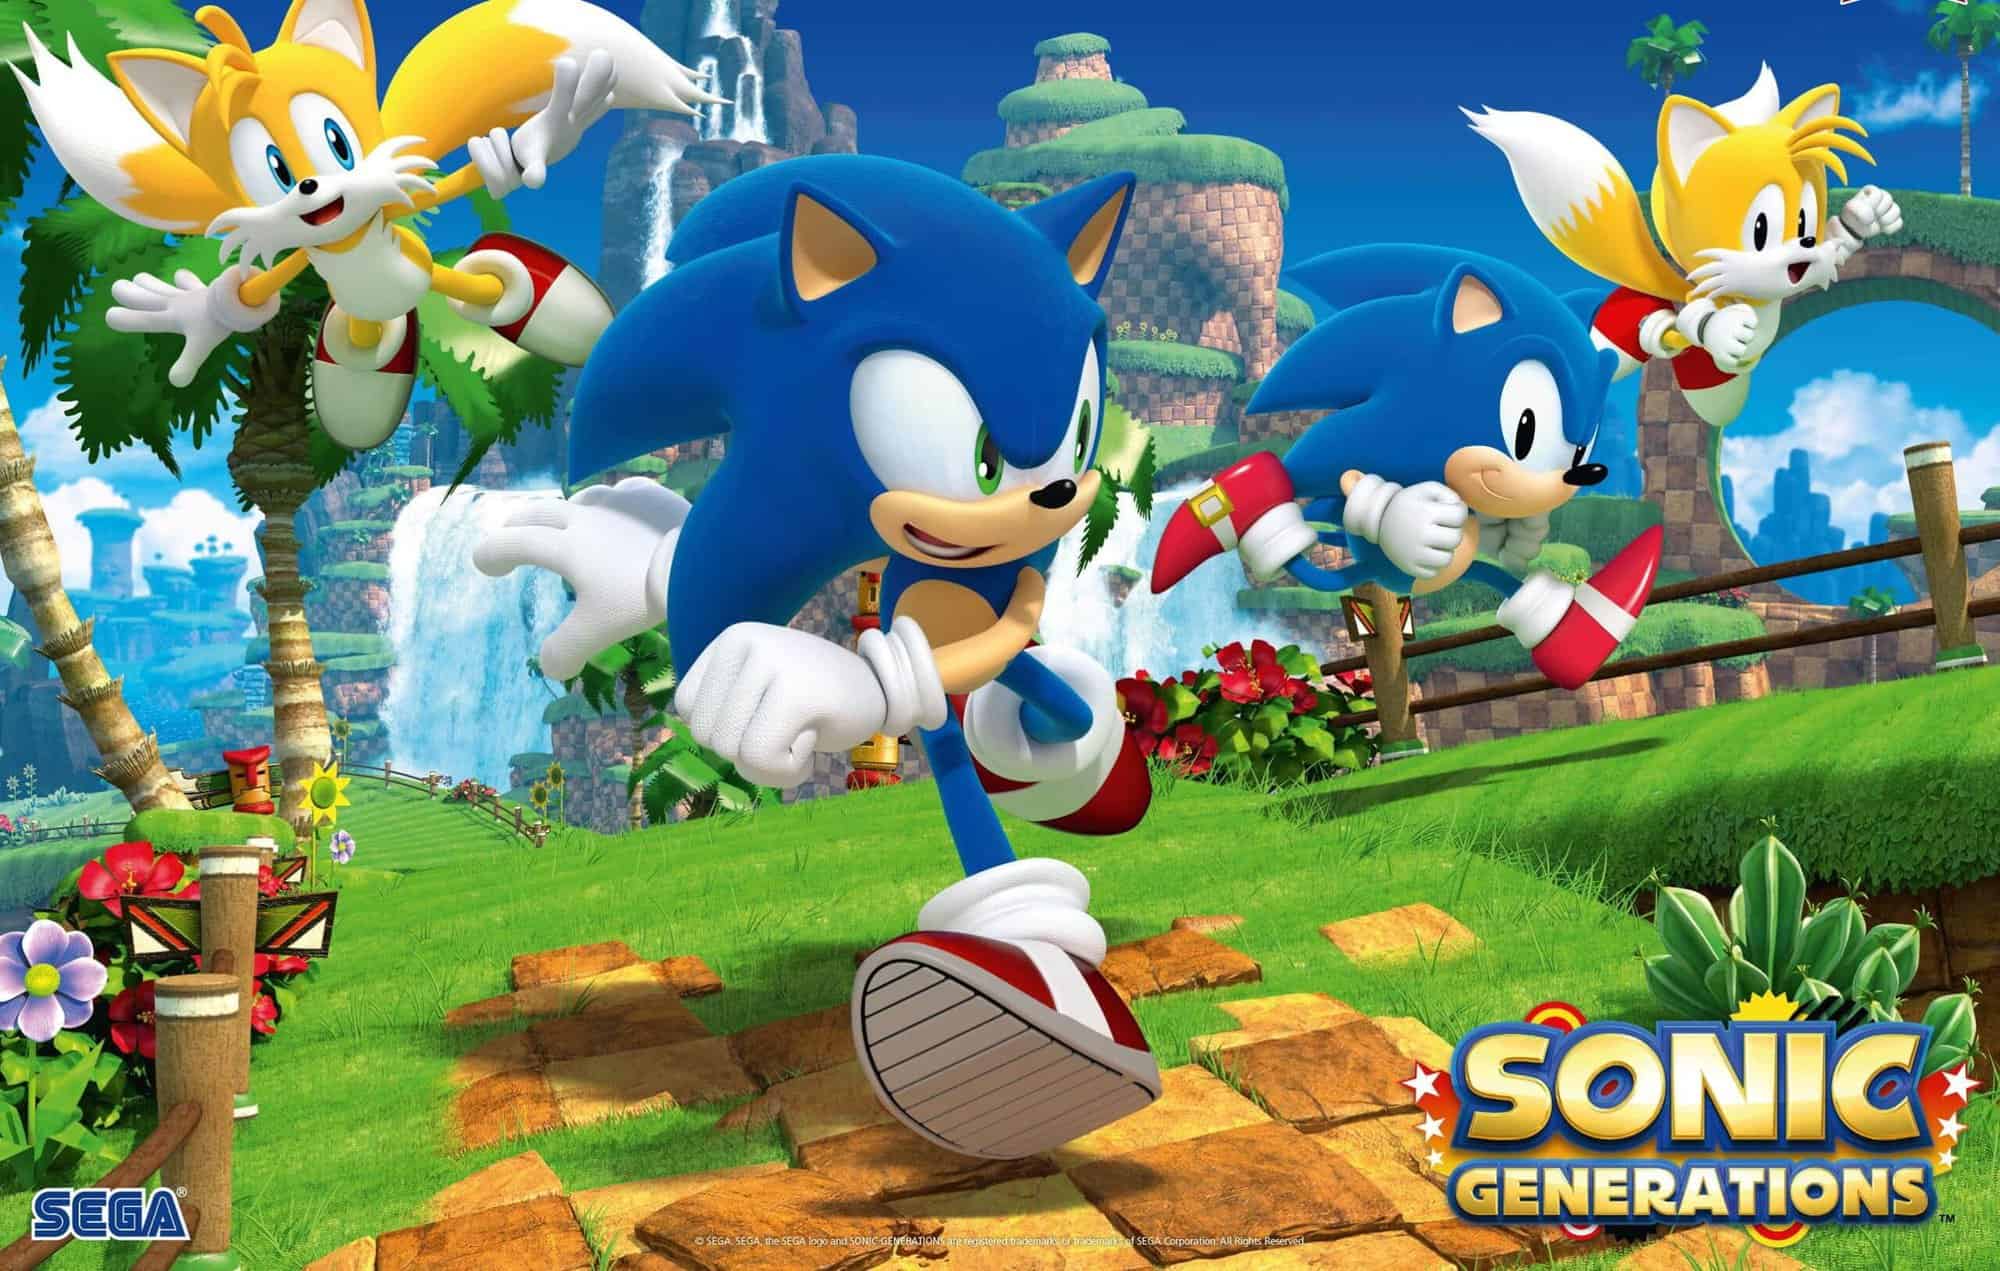 Jogo Sonic Generations para Vídeo Game Xbox 360